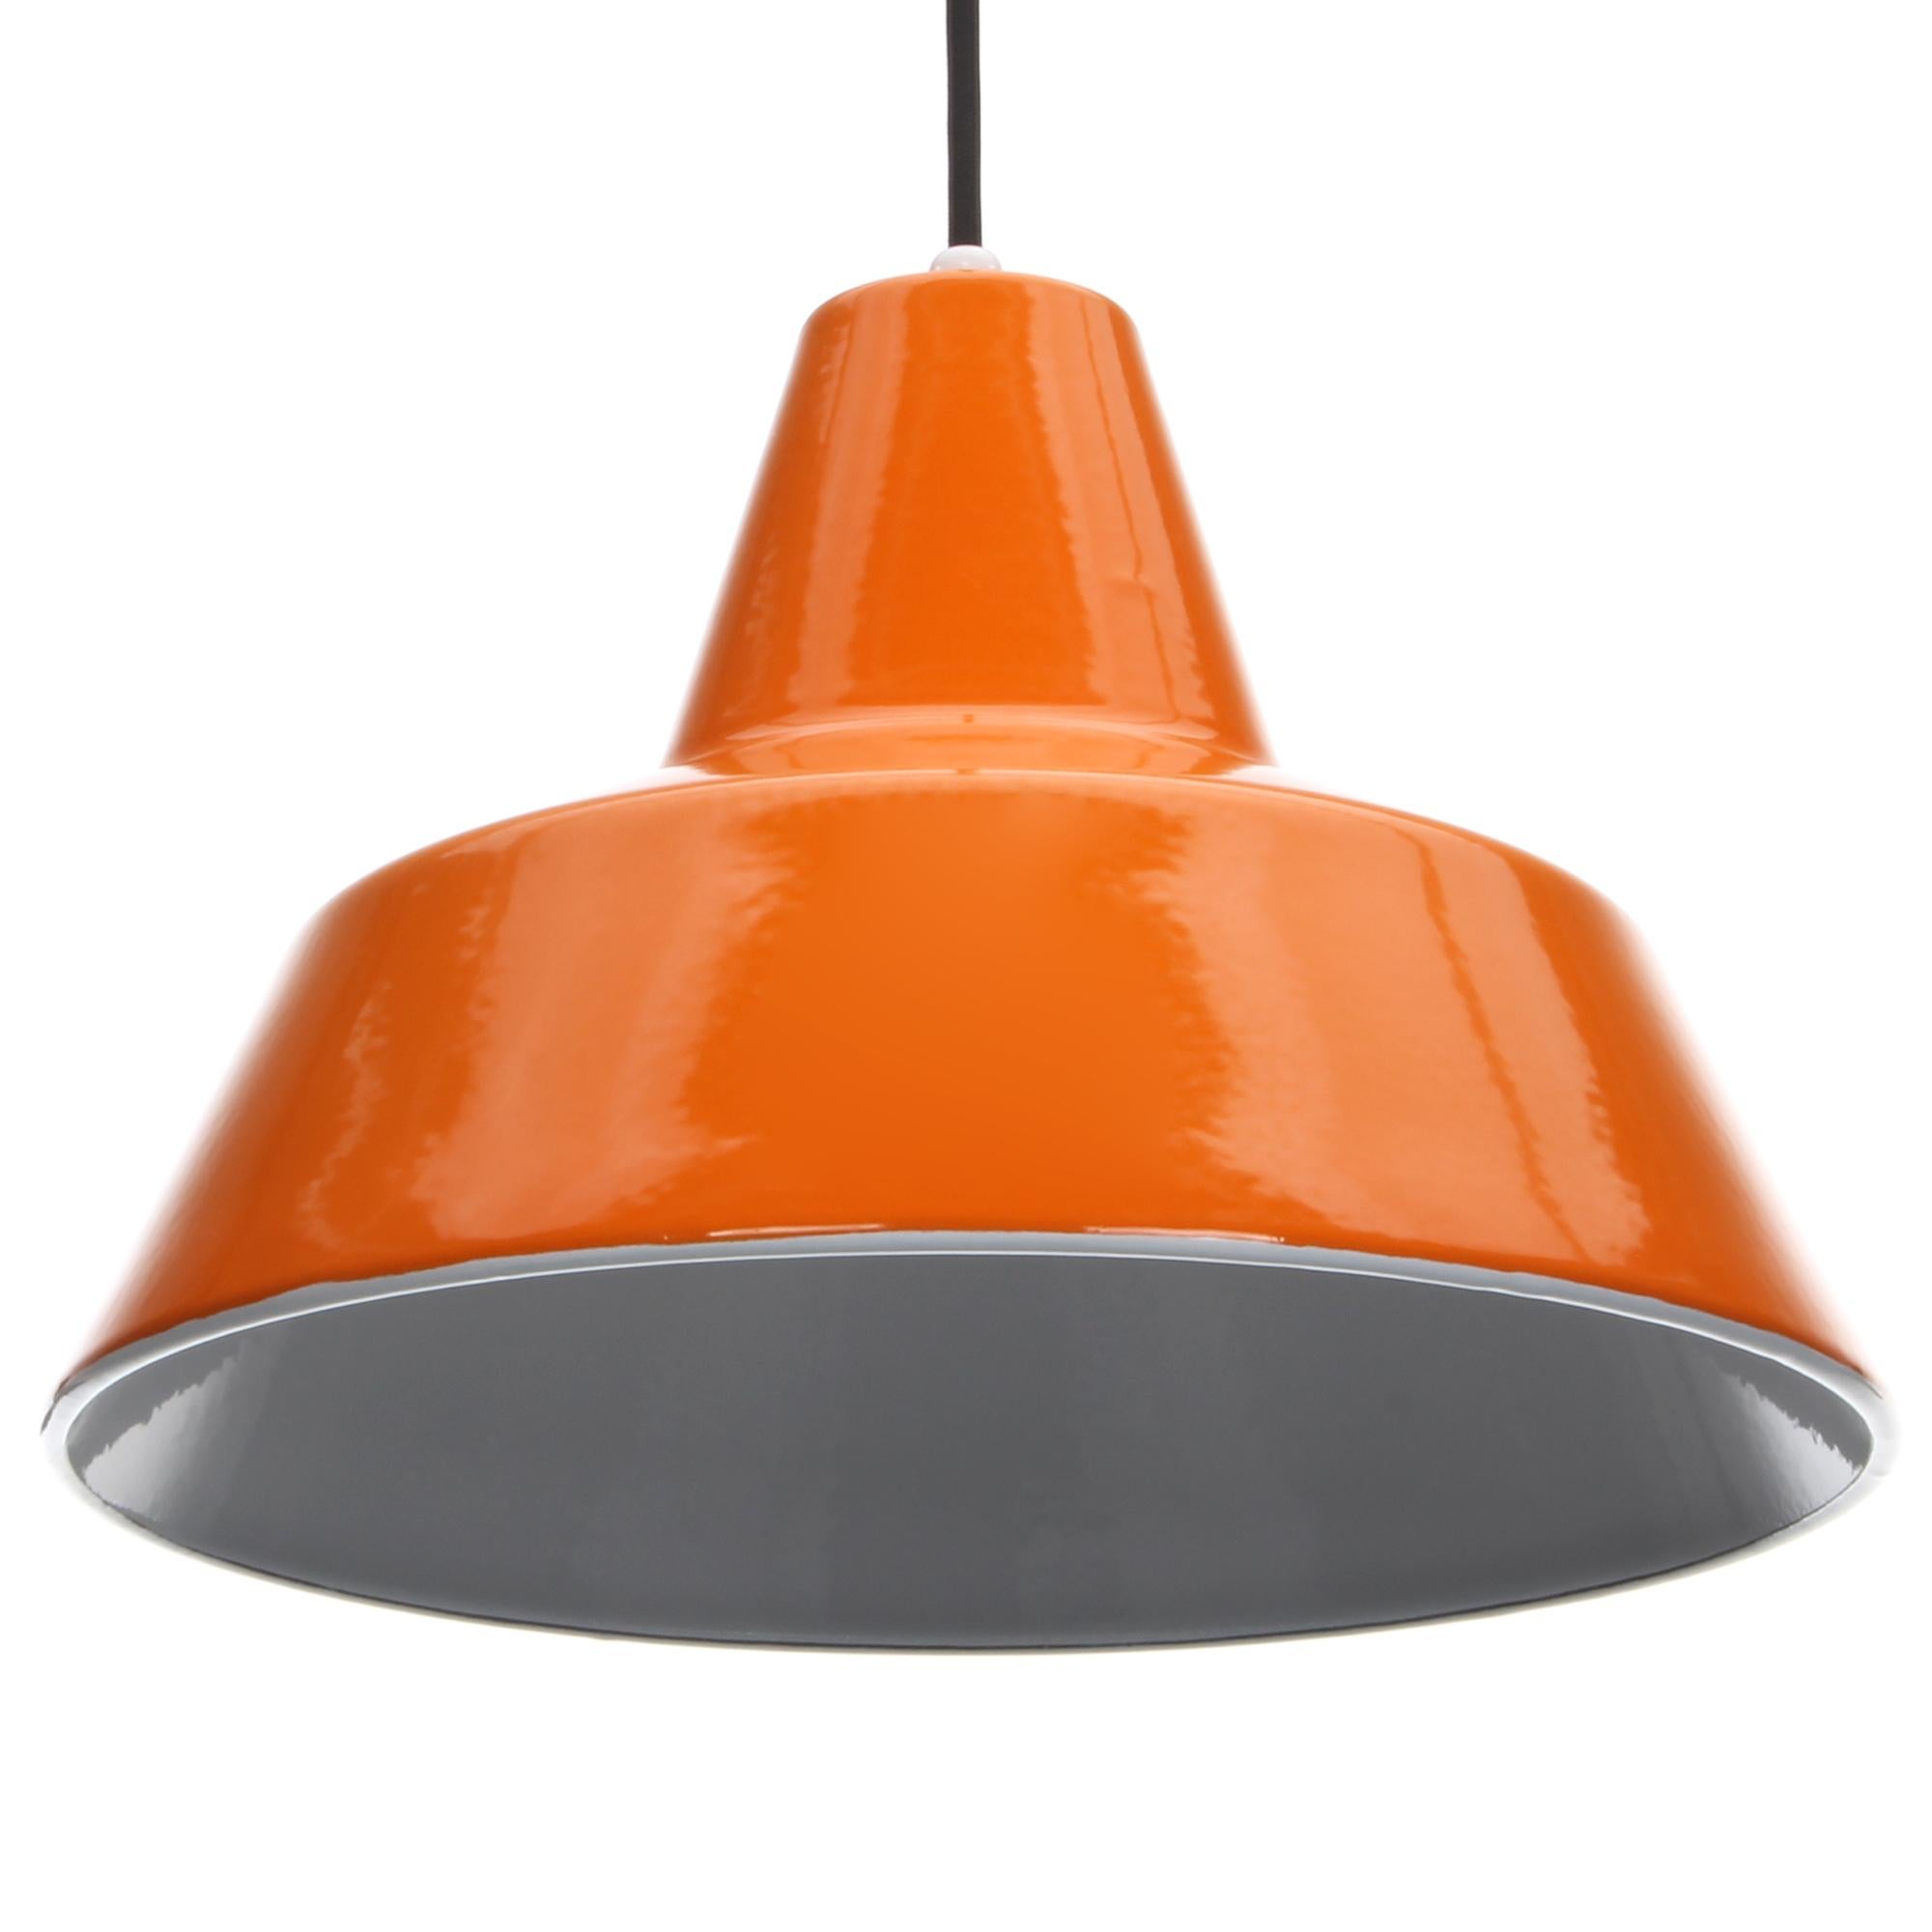 Enamel Pendant, Orange Danish Lamp by Louis Poulsen, 1960s, Large Workshop Light (Industriell)